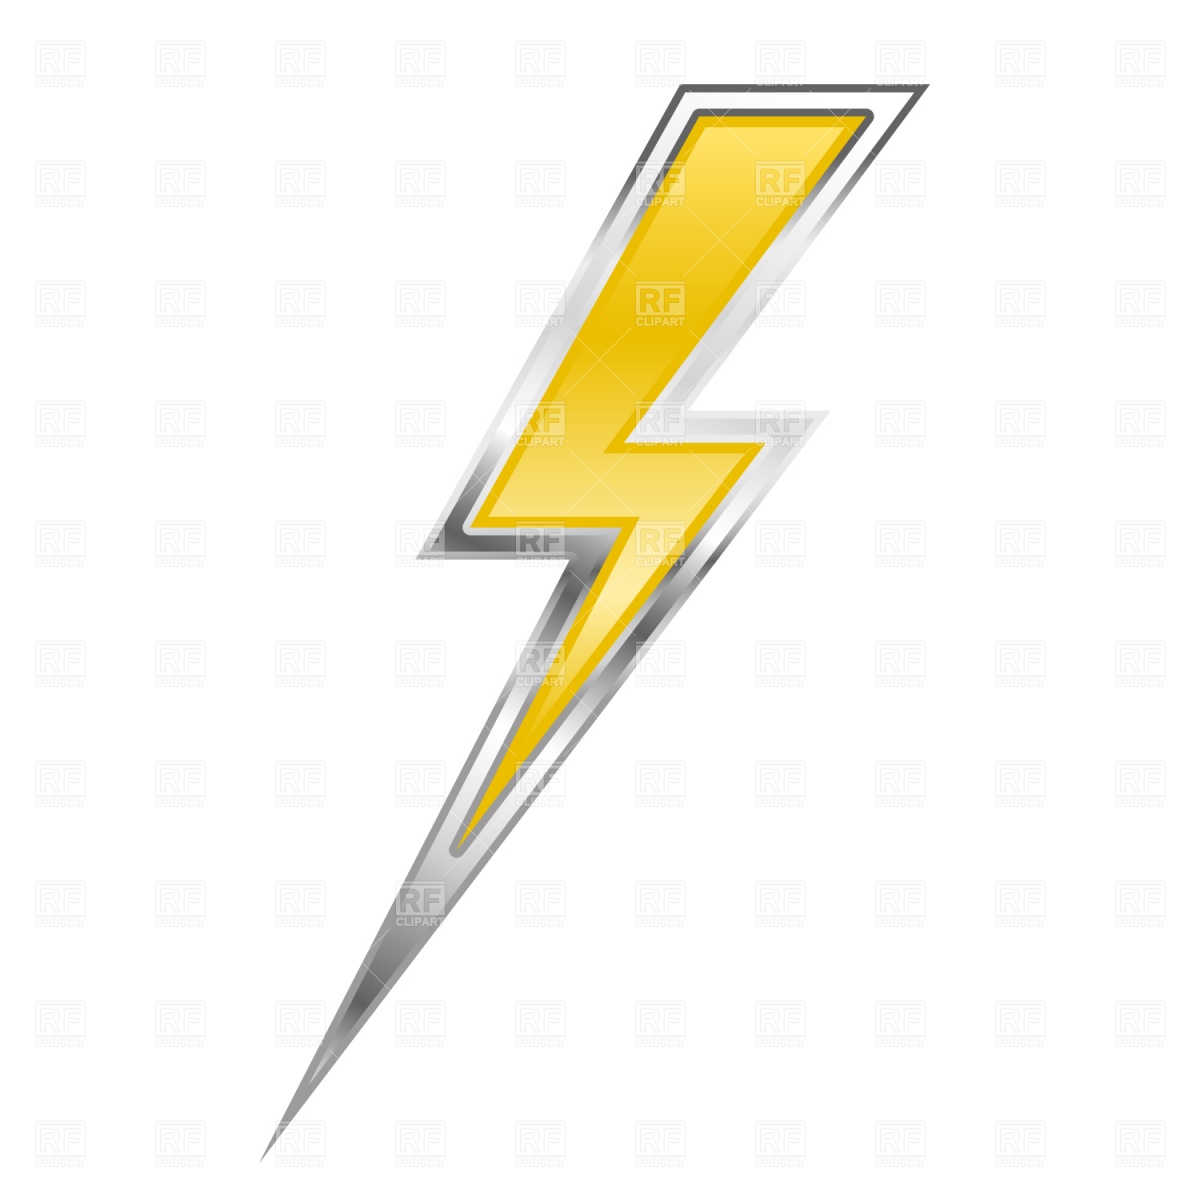 Electric clipart lightnig. Lightning bolt x free